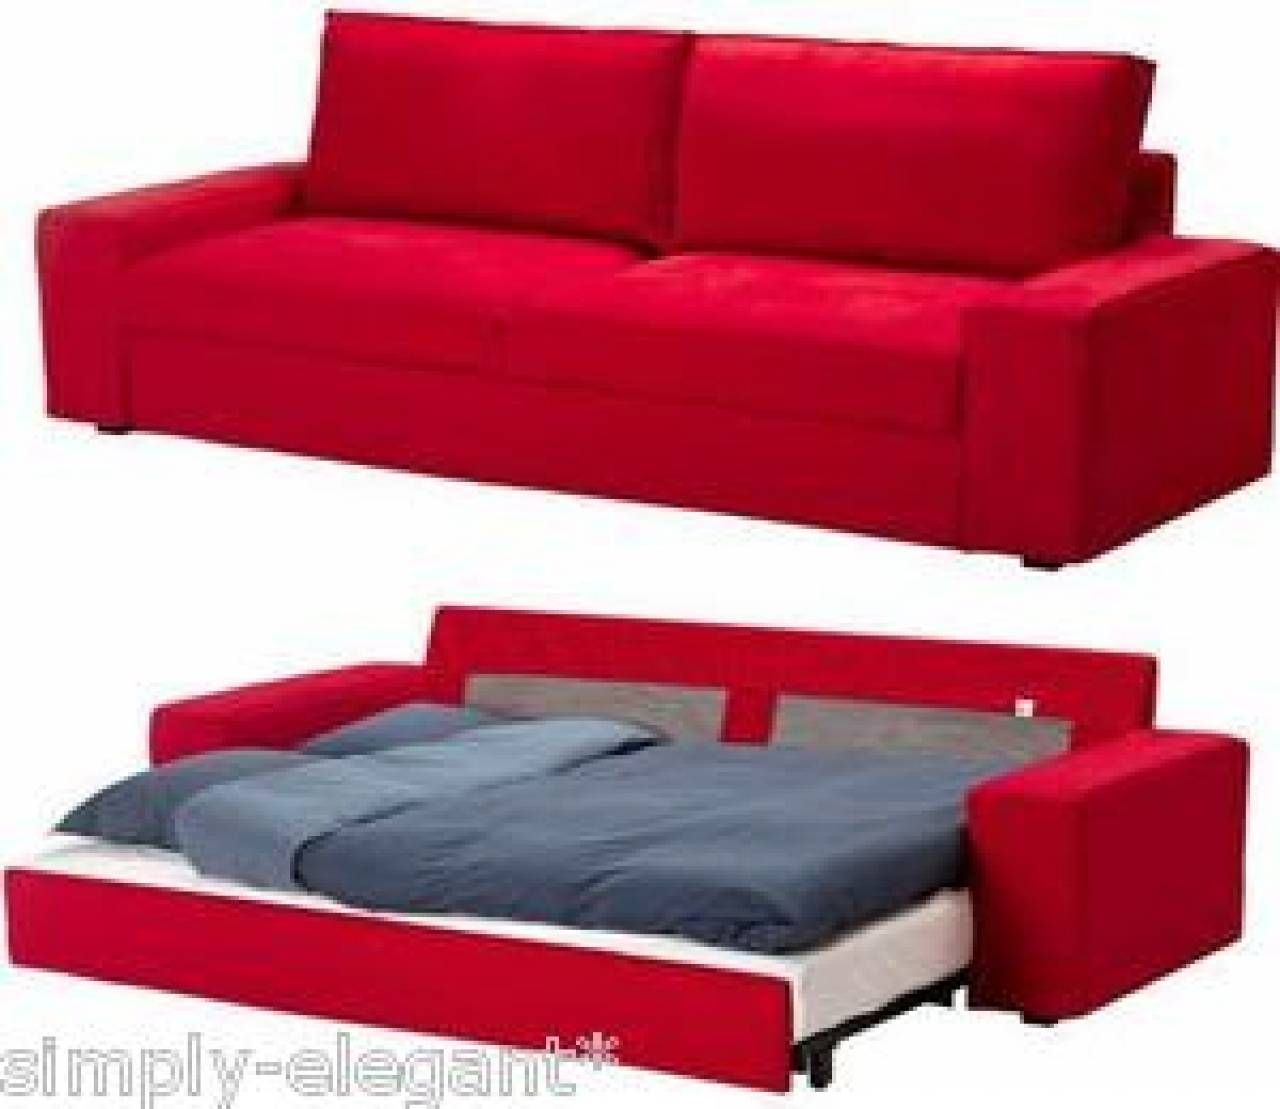 Sofas Center : Sofa Beds Futons Ikea Twin Sleeper Literarywondrous With Regard To Sleeper Sofa Sectional Ikea (View 12 of 25)